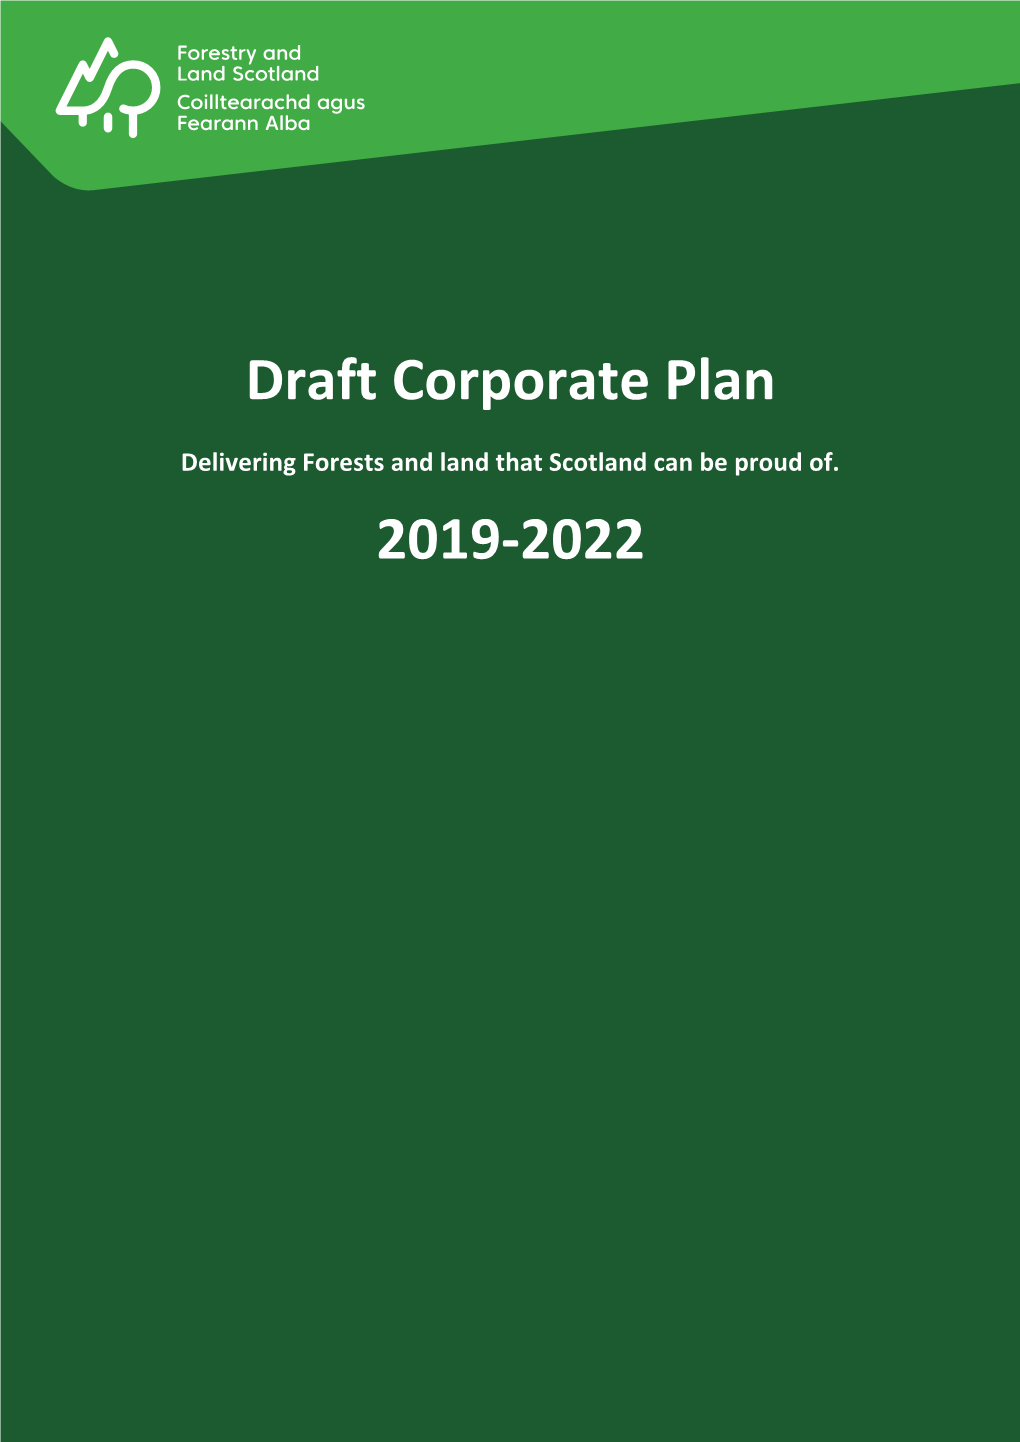 Draft Corporate Plan 2019-2022